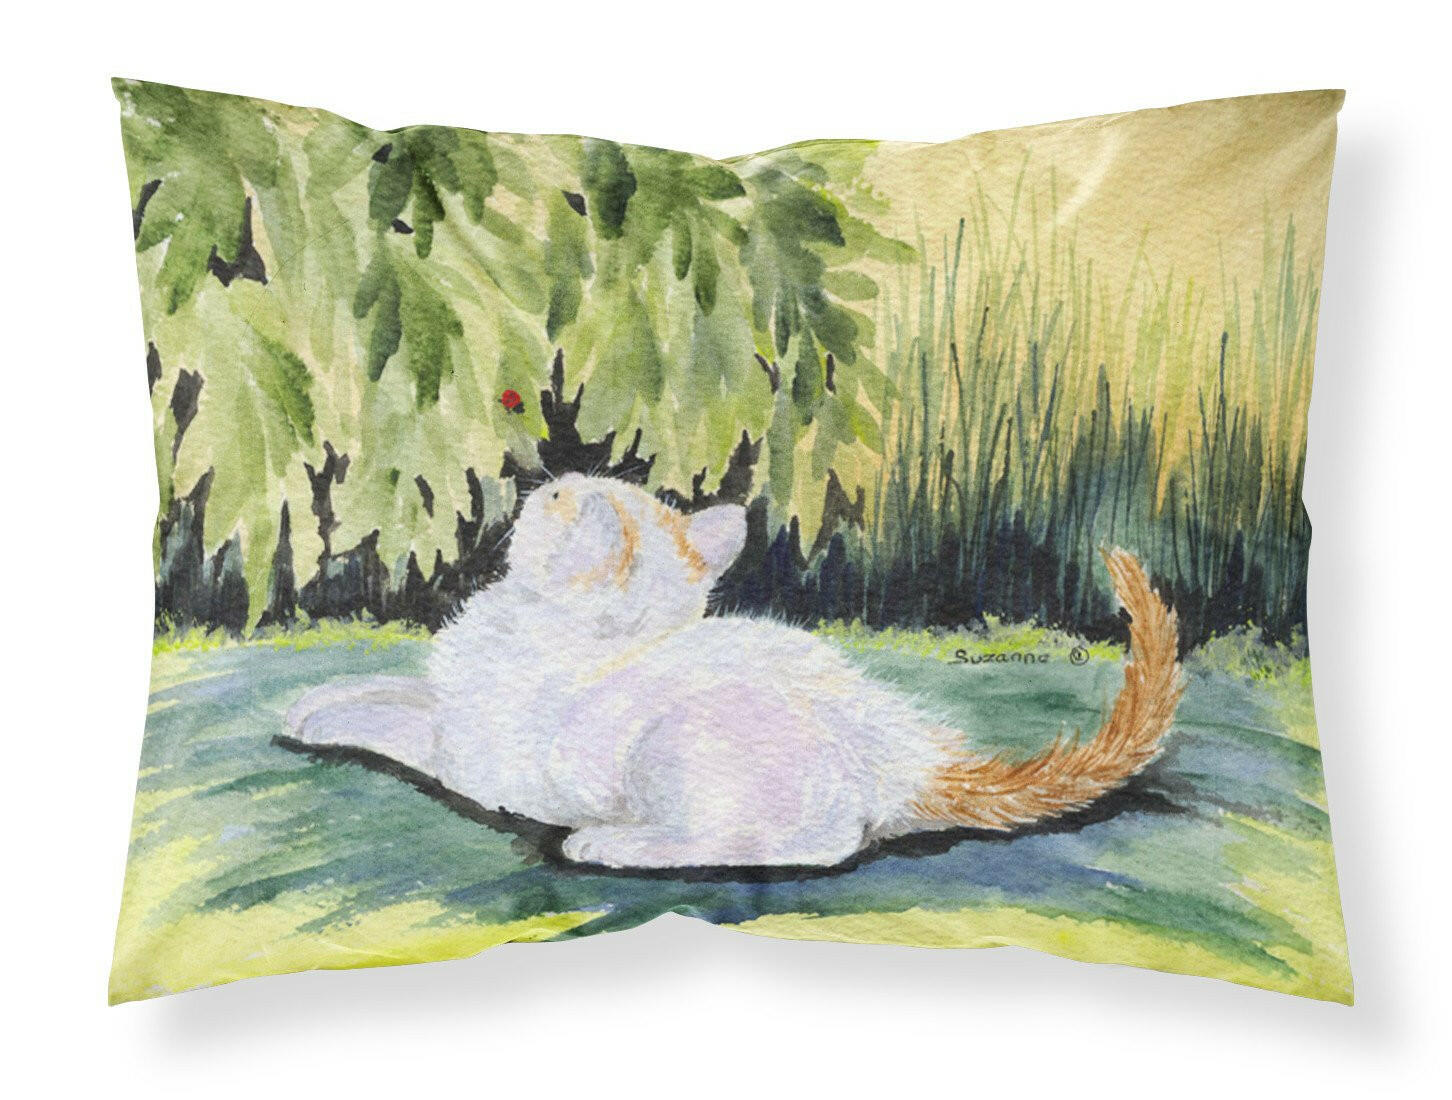 Cat Moisture wicking Fabric standard pillowcase by Caroline's Treasures